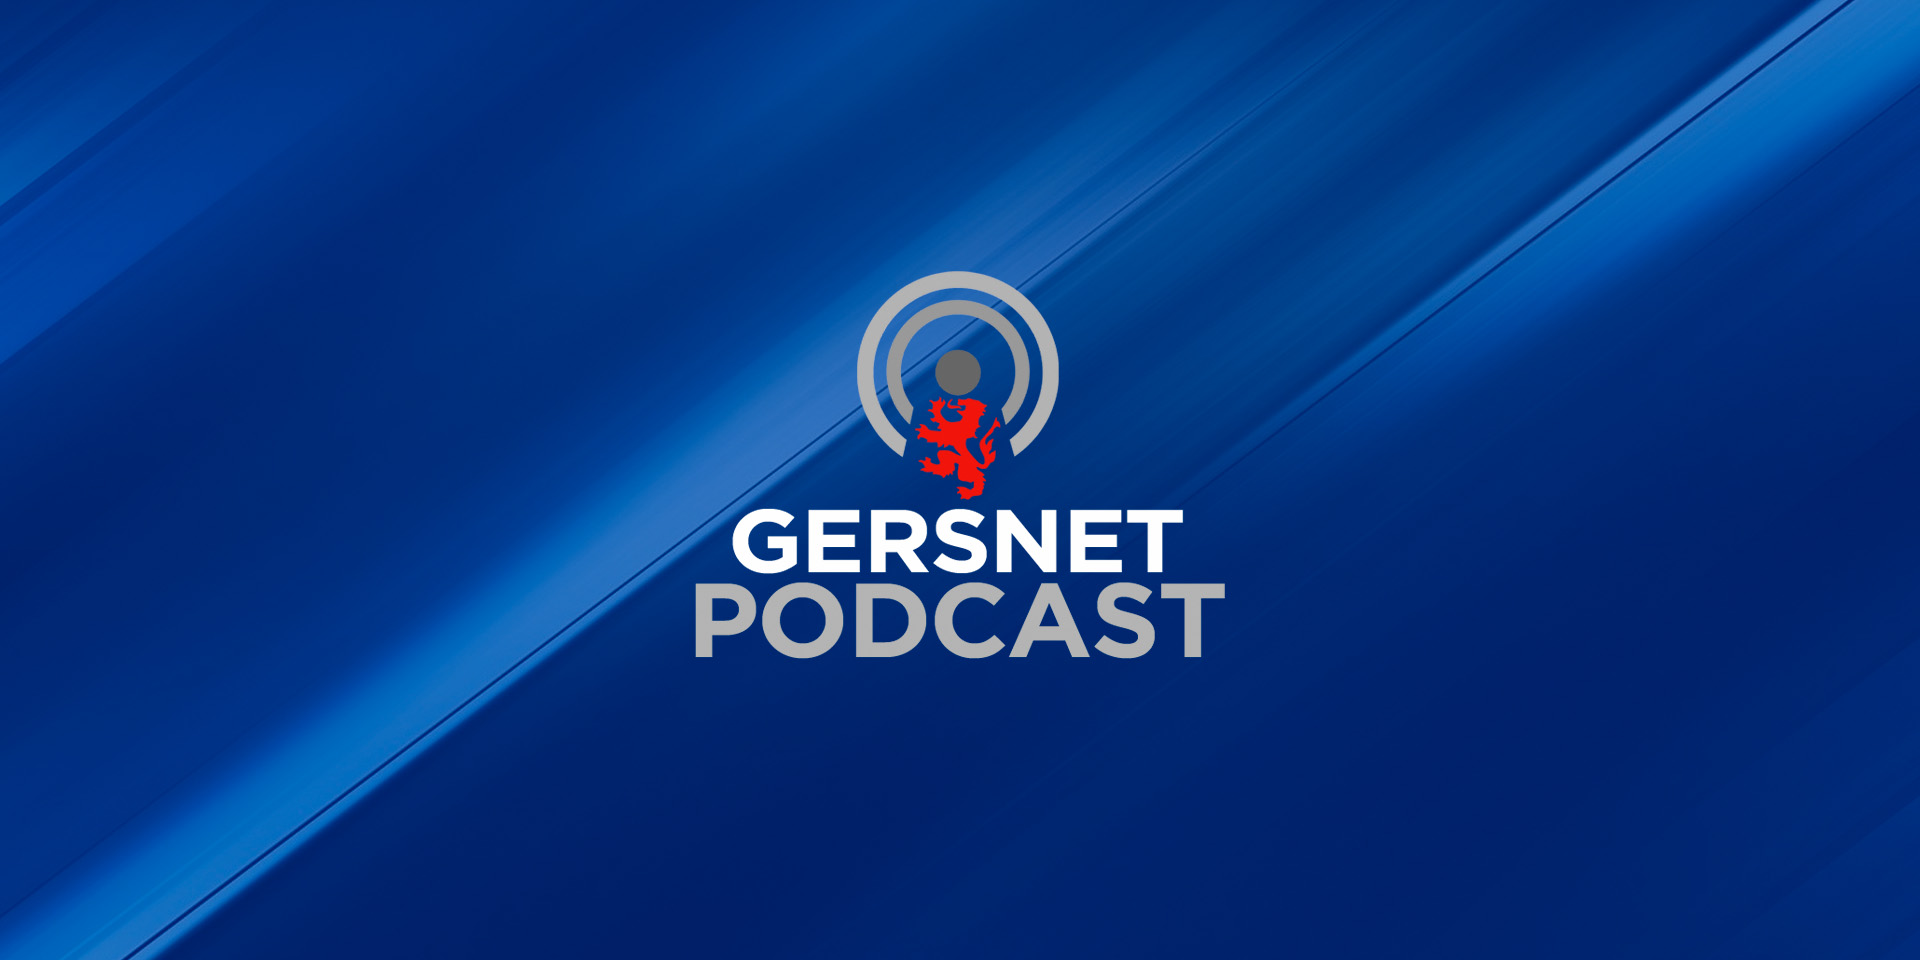 Gersnet Podcast 312 - A super Saturday